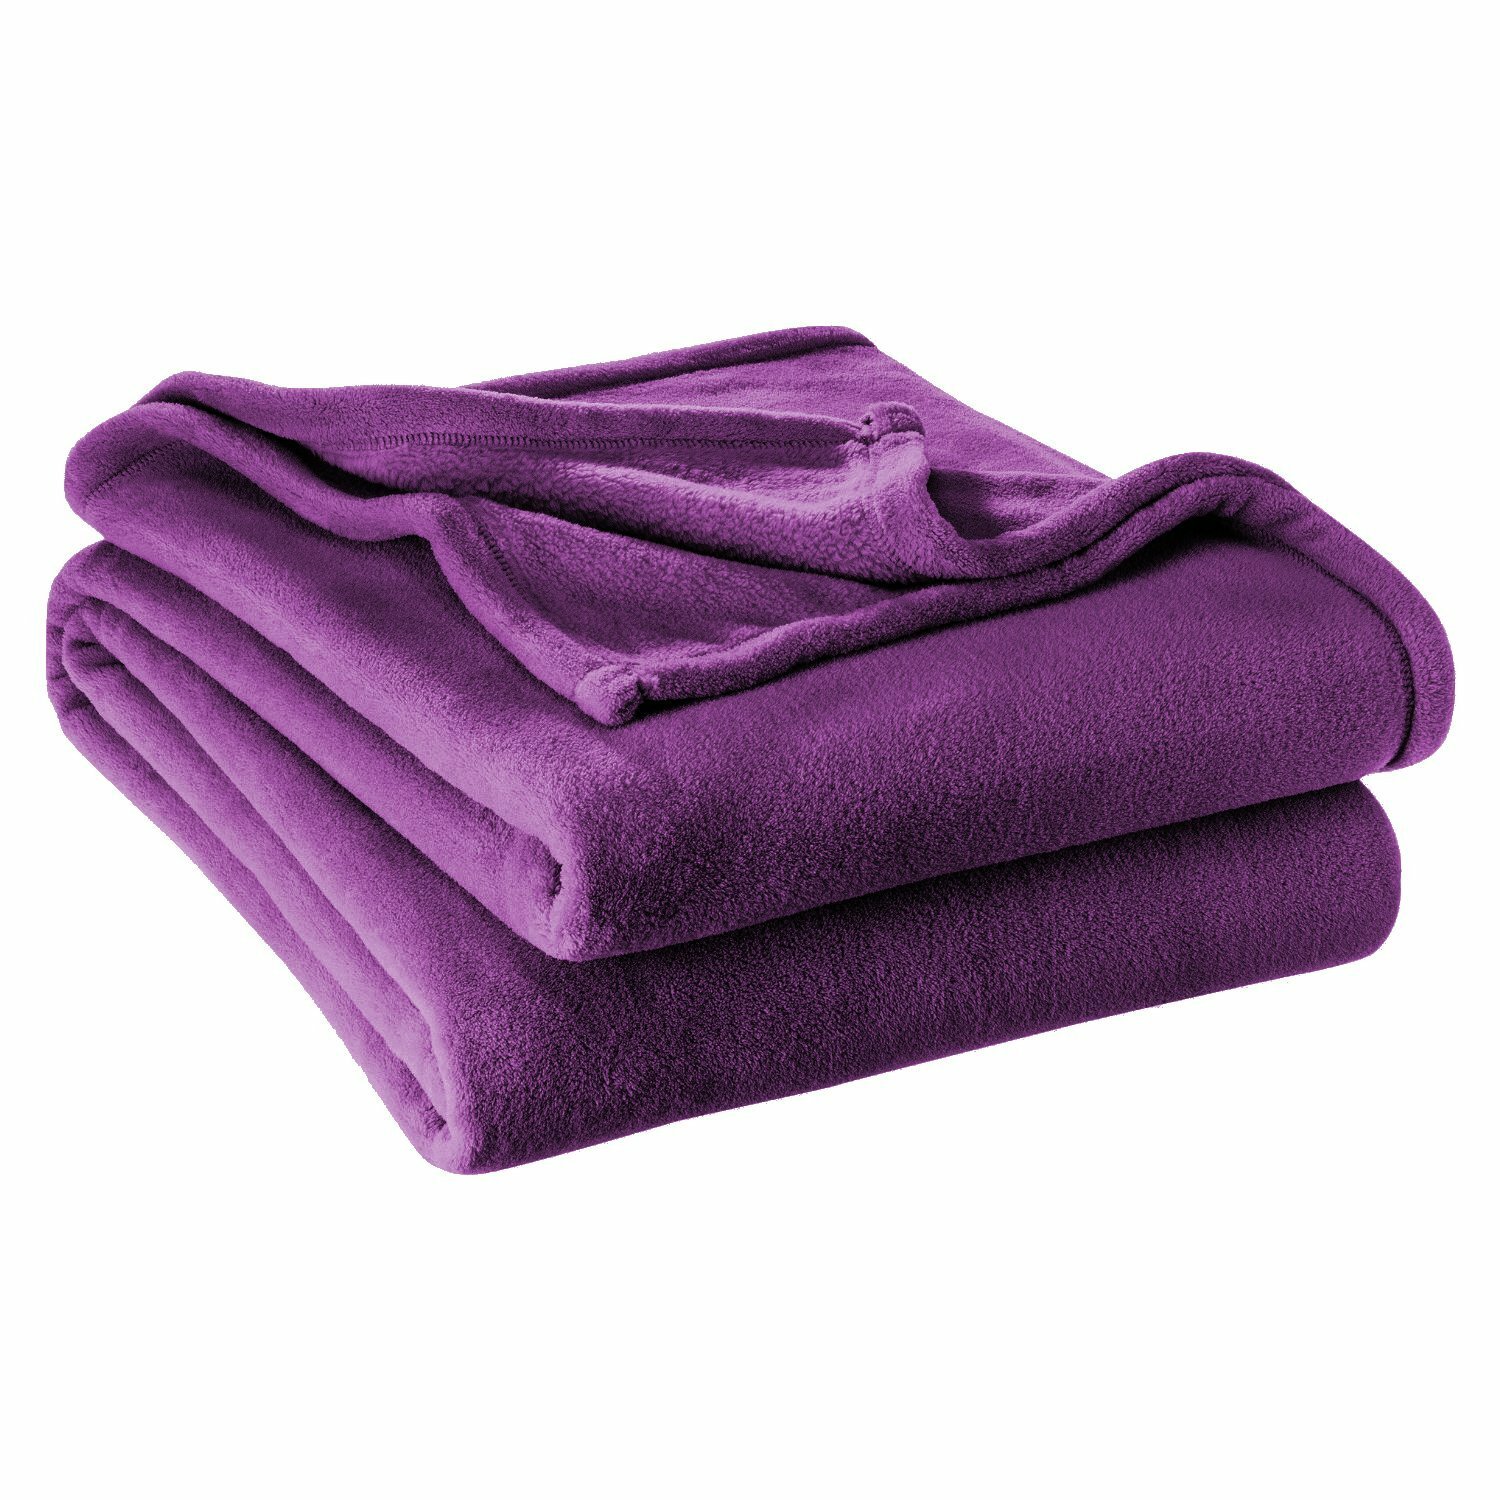 Bare Home Premium Ultra Soft Microplush Blanket And Reviews Wayfair